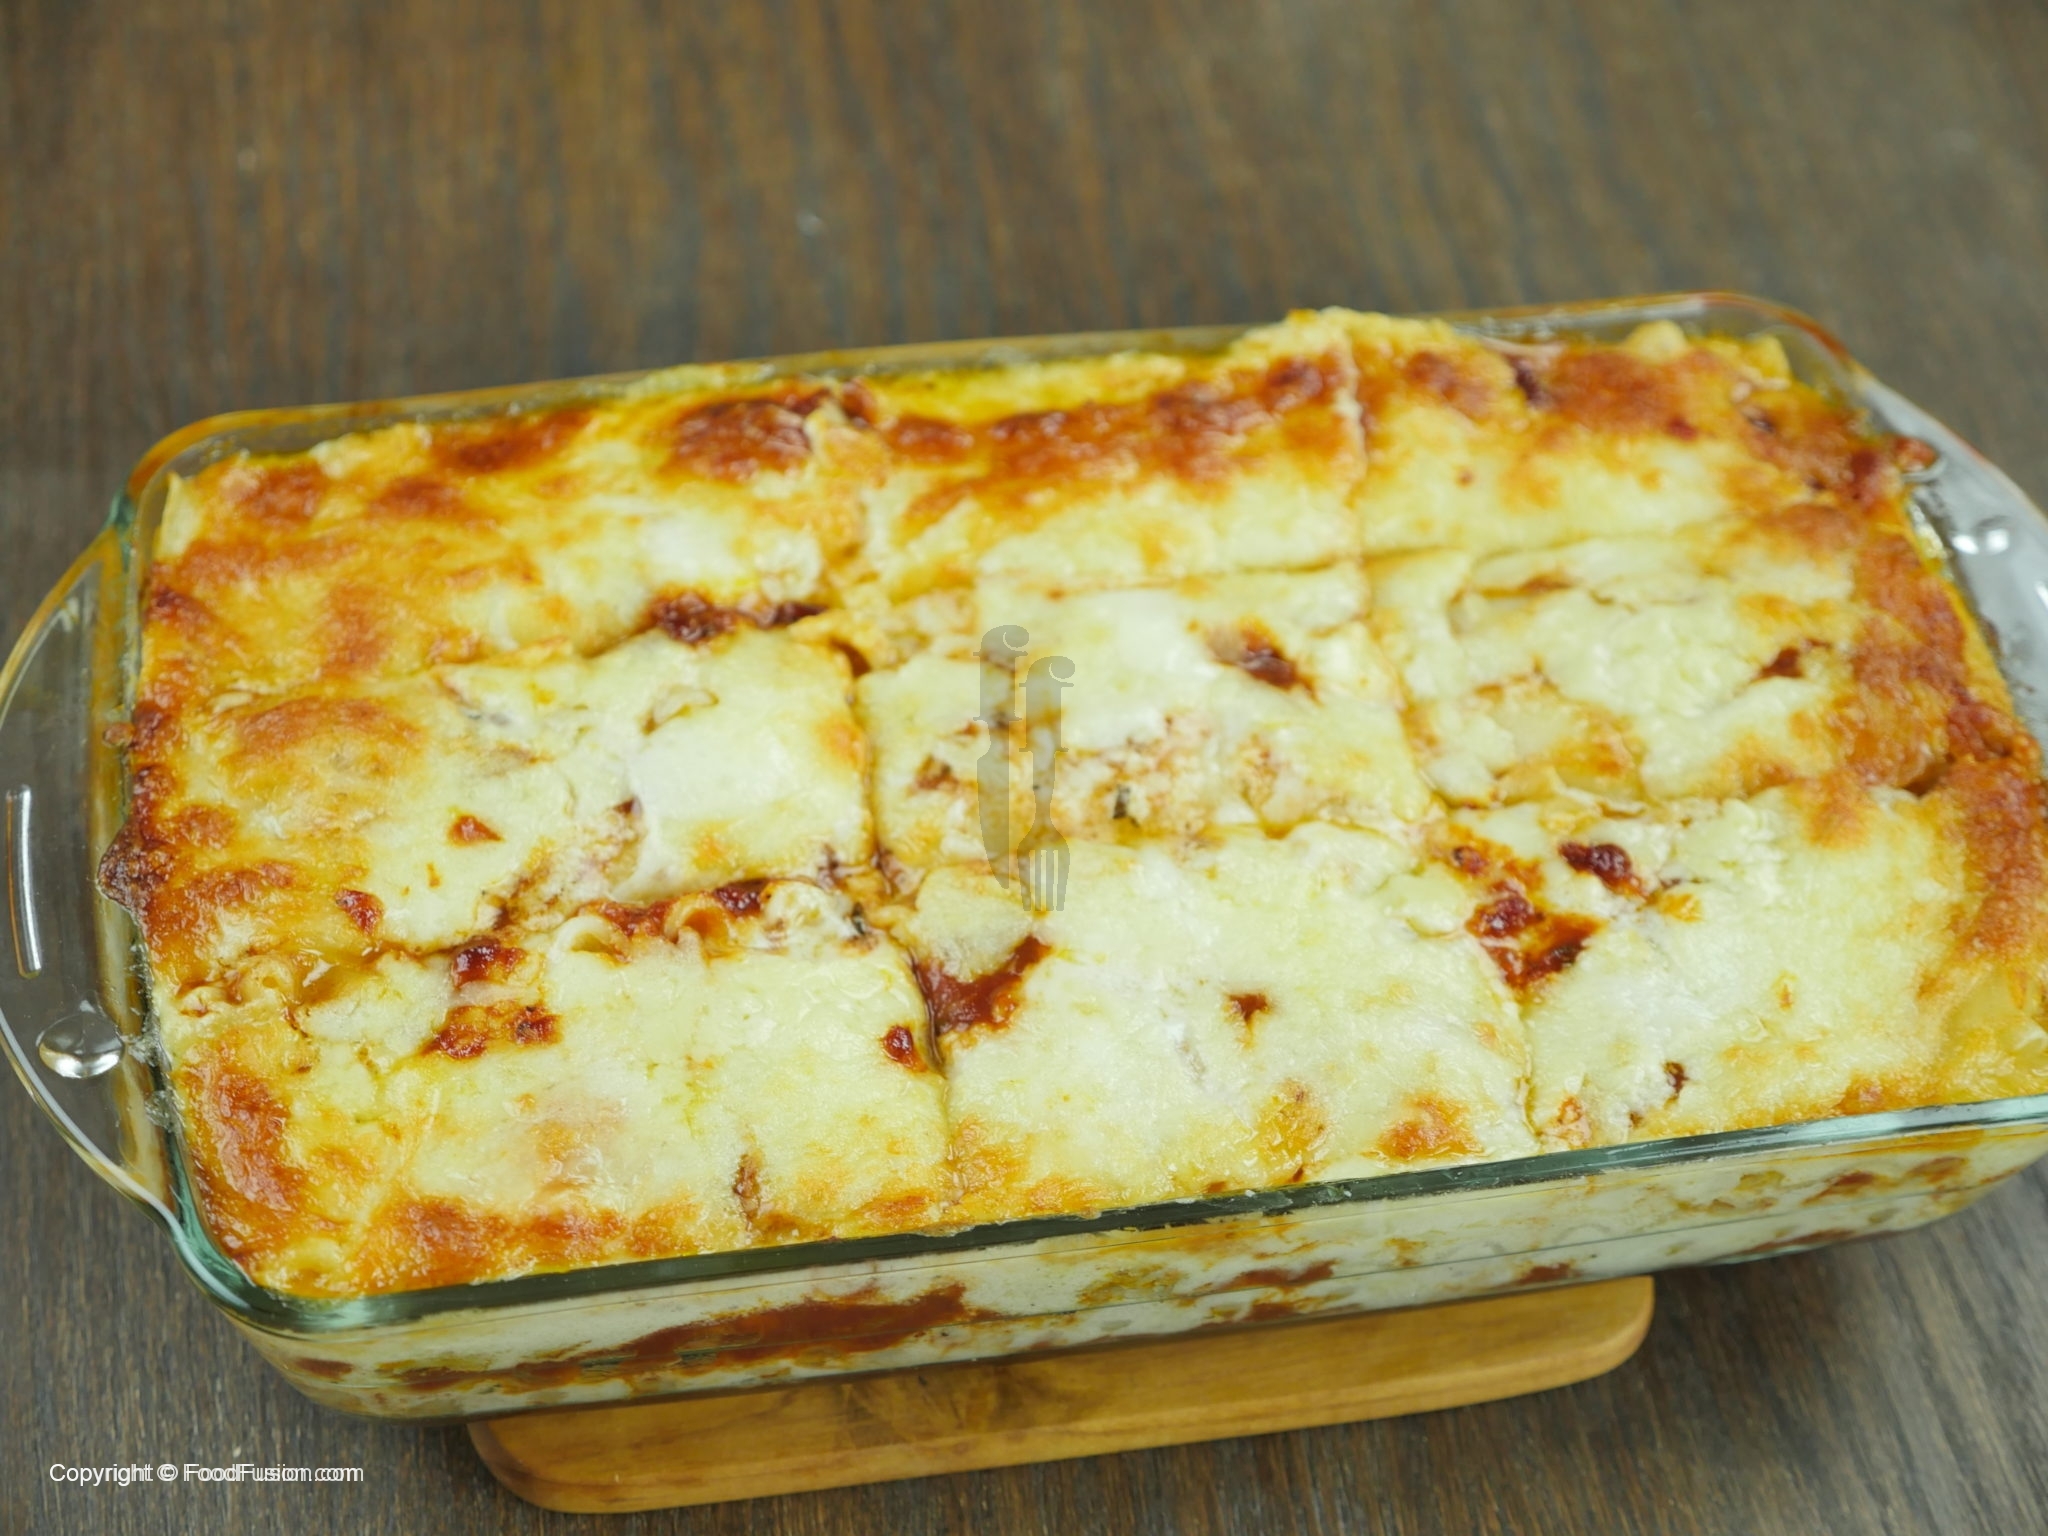 Lasagna Food Fusion